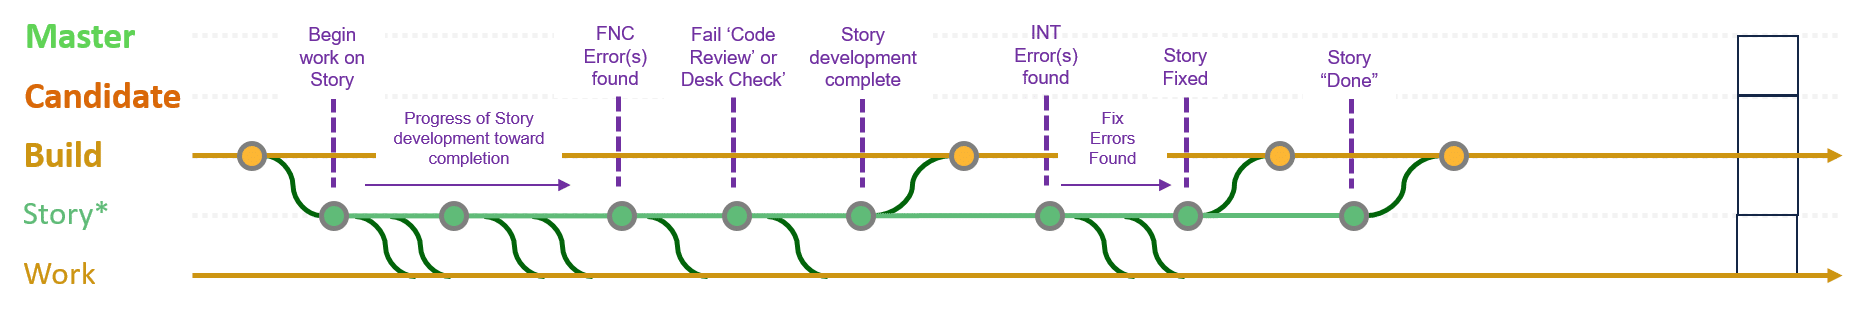 Story Development